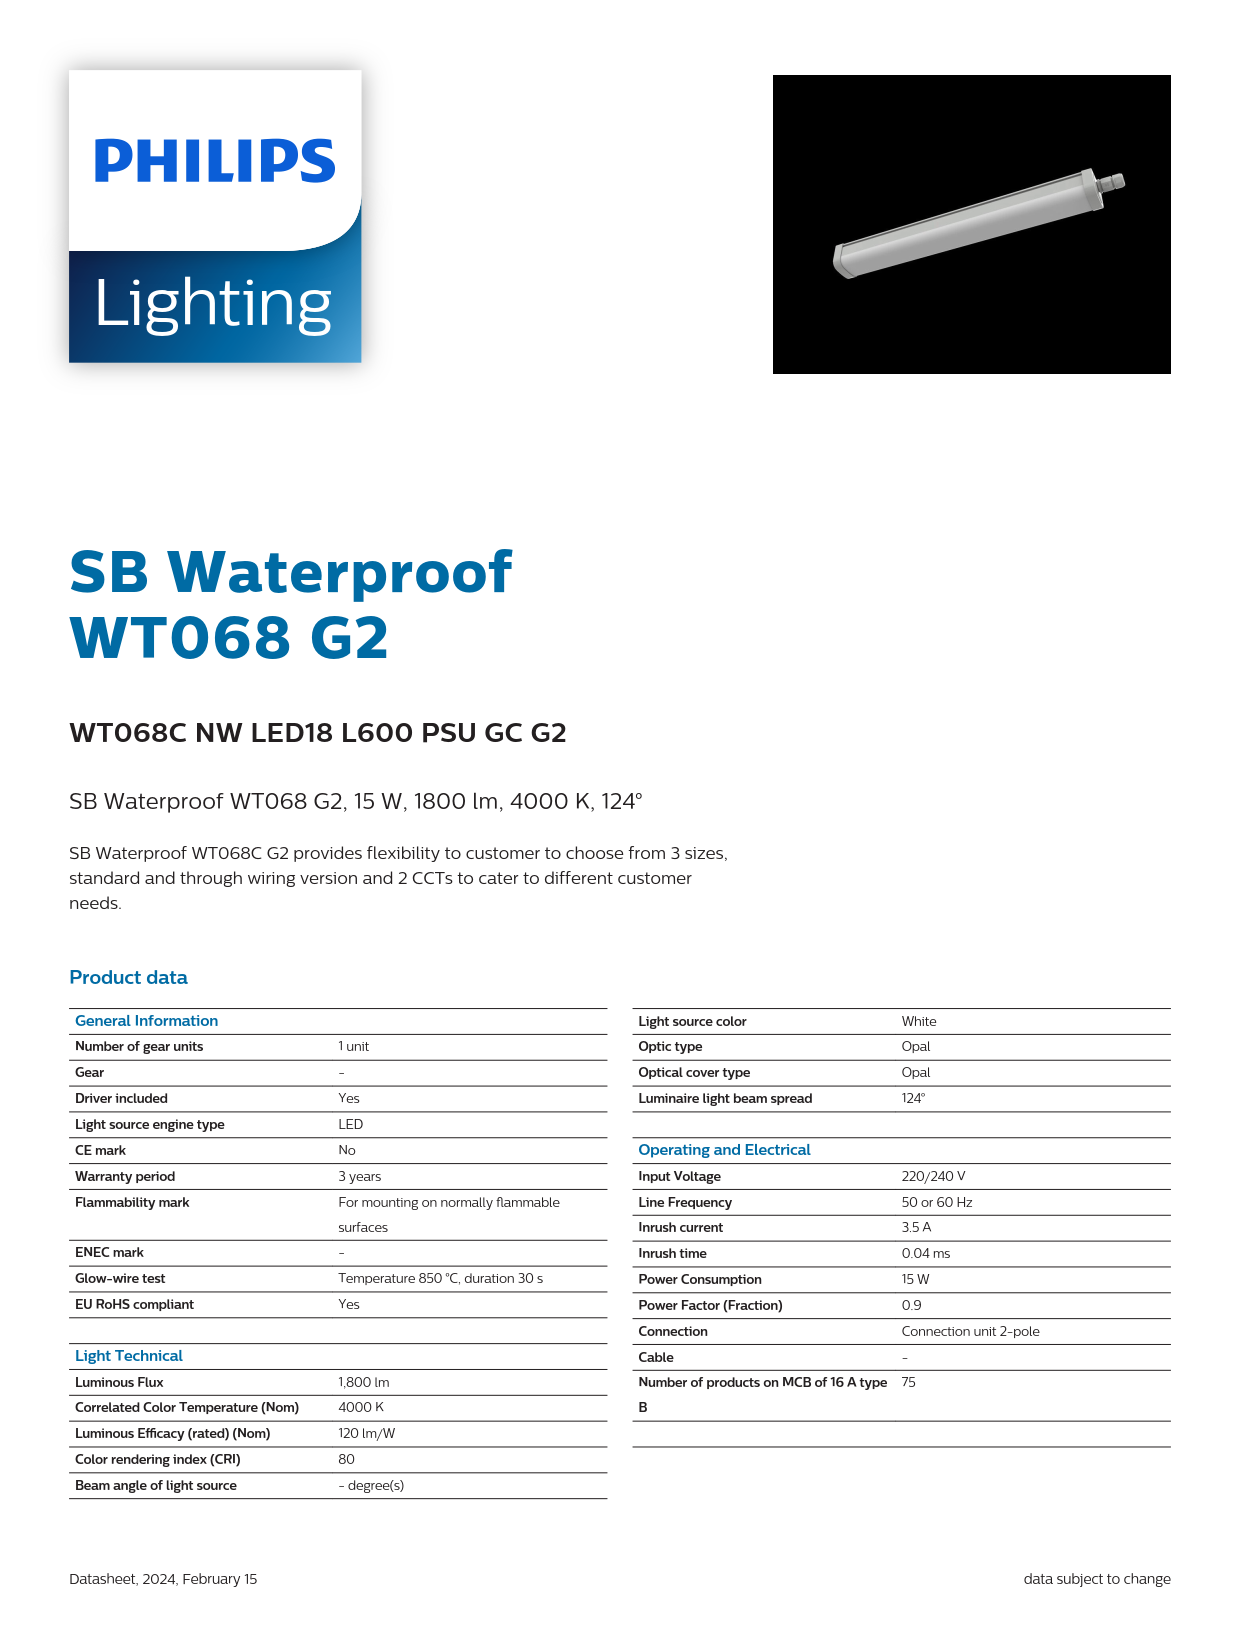 PHILIPS Waterproof Fixture light WT068C NW LED18 L600 PSU GC G2 911401861785